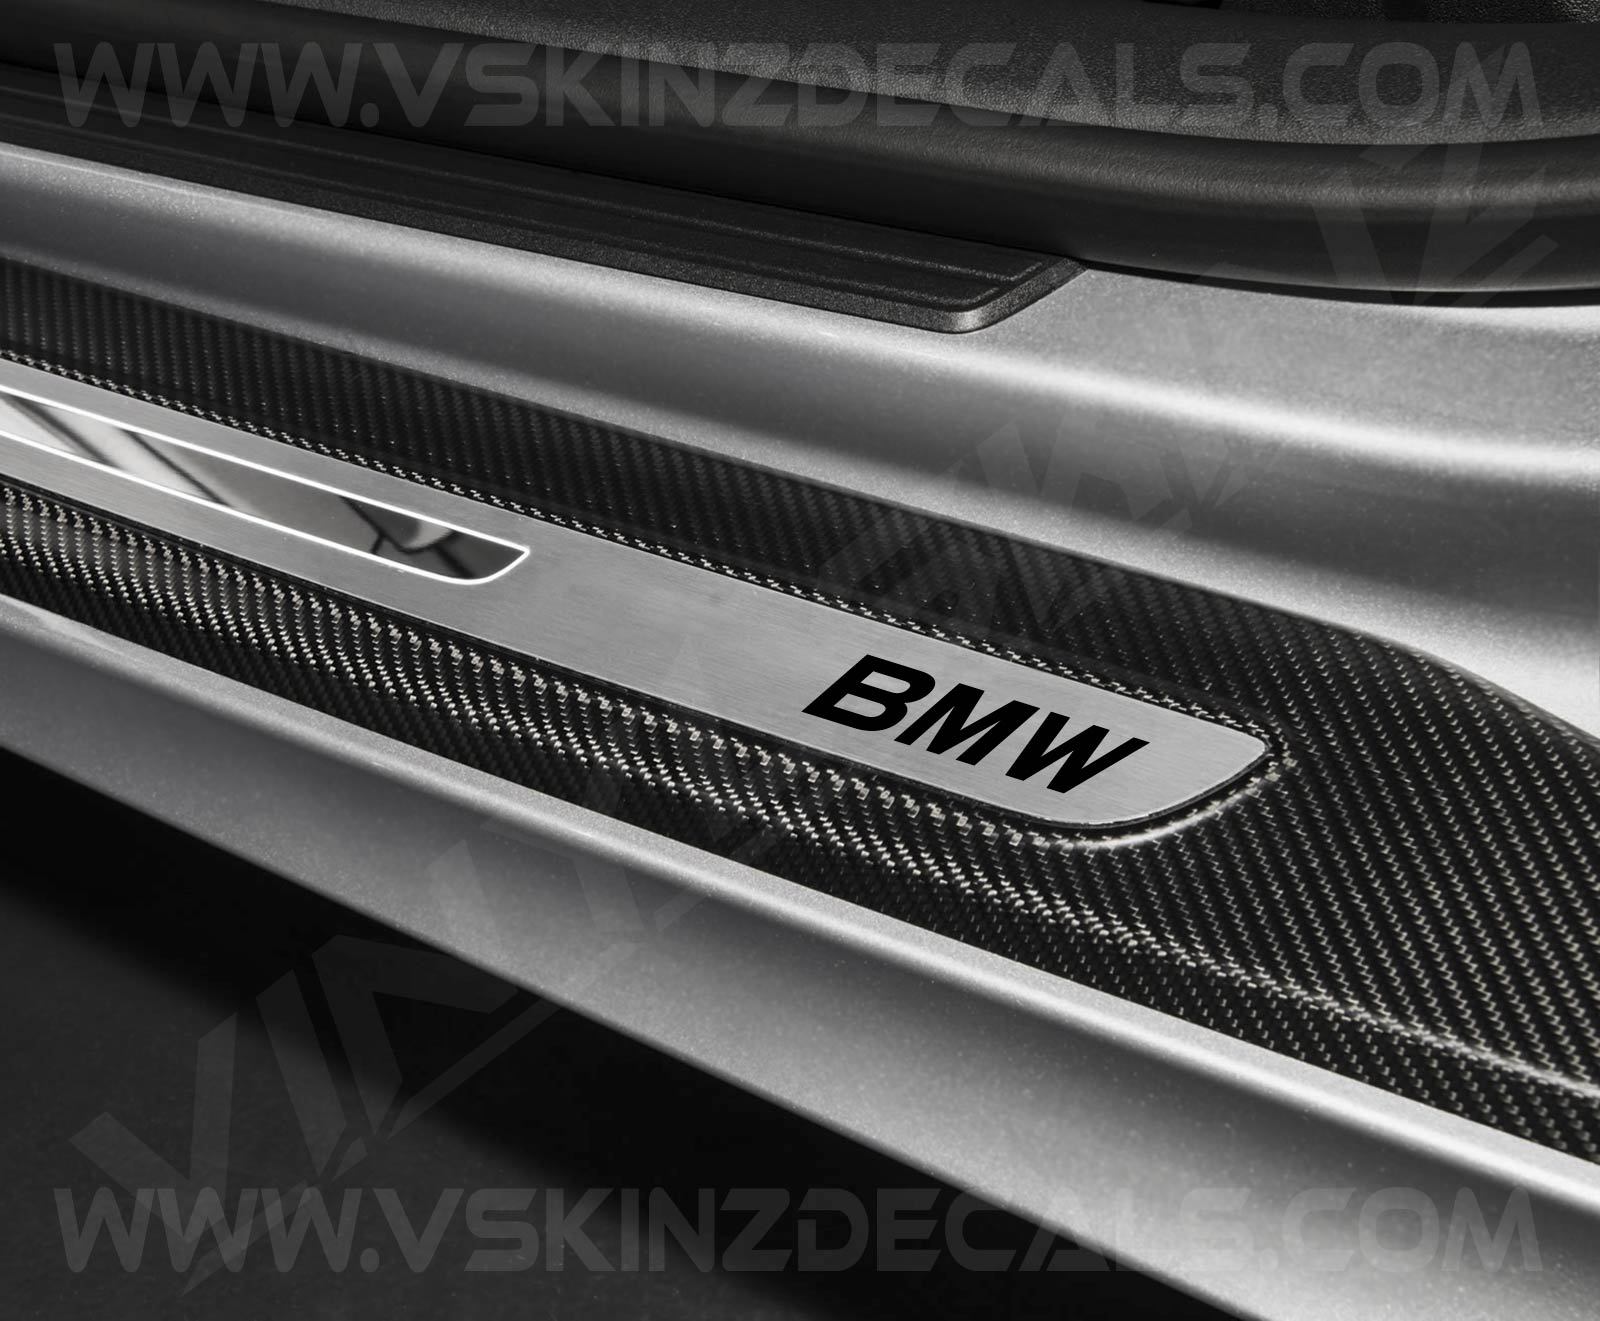 BMW Logo Door Sill Decals Stickers Premium Quality 5 Colors M3 M4 Alpina X3 X5 M - $11.00